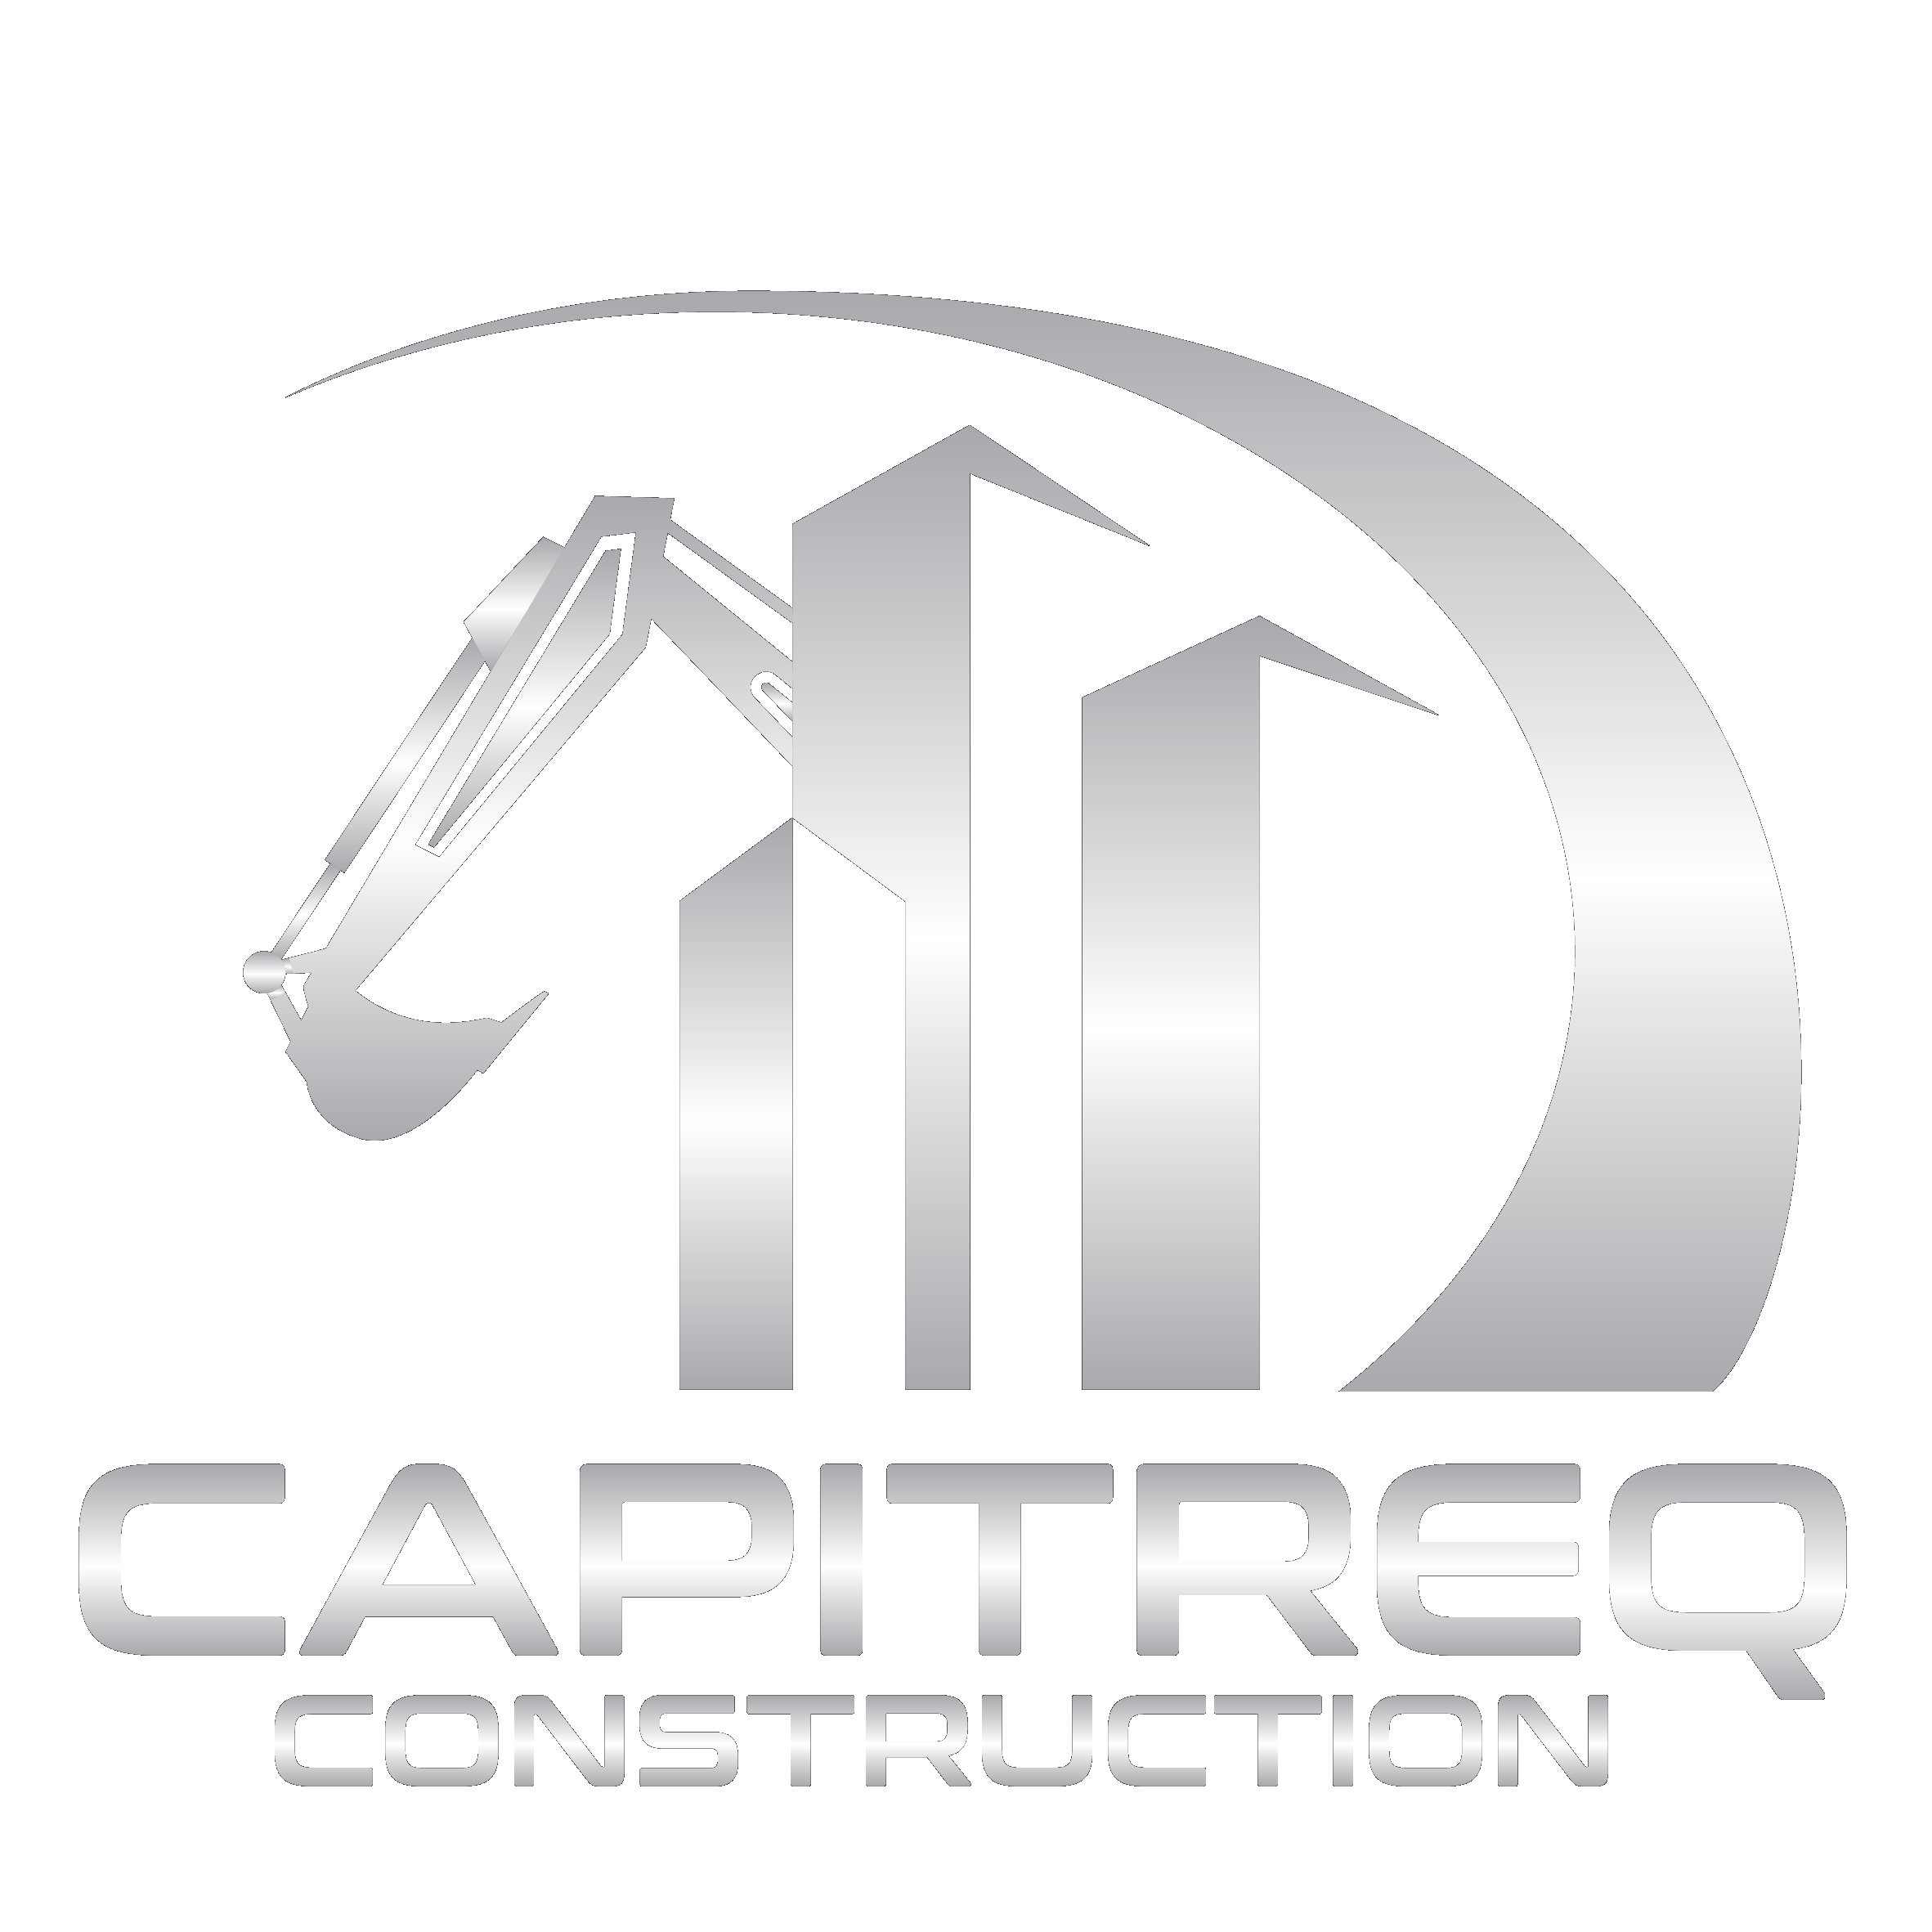 Capitreq Construction